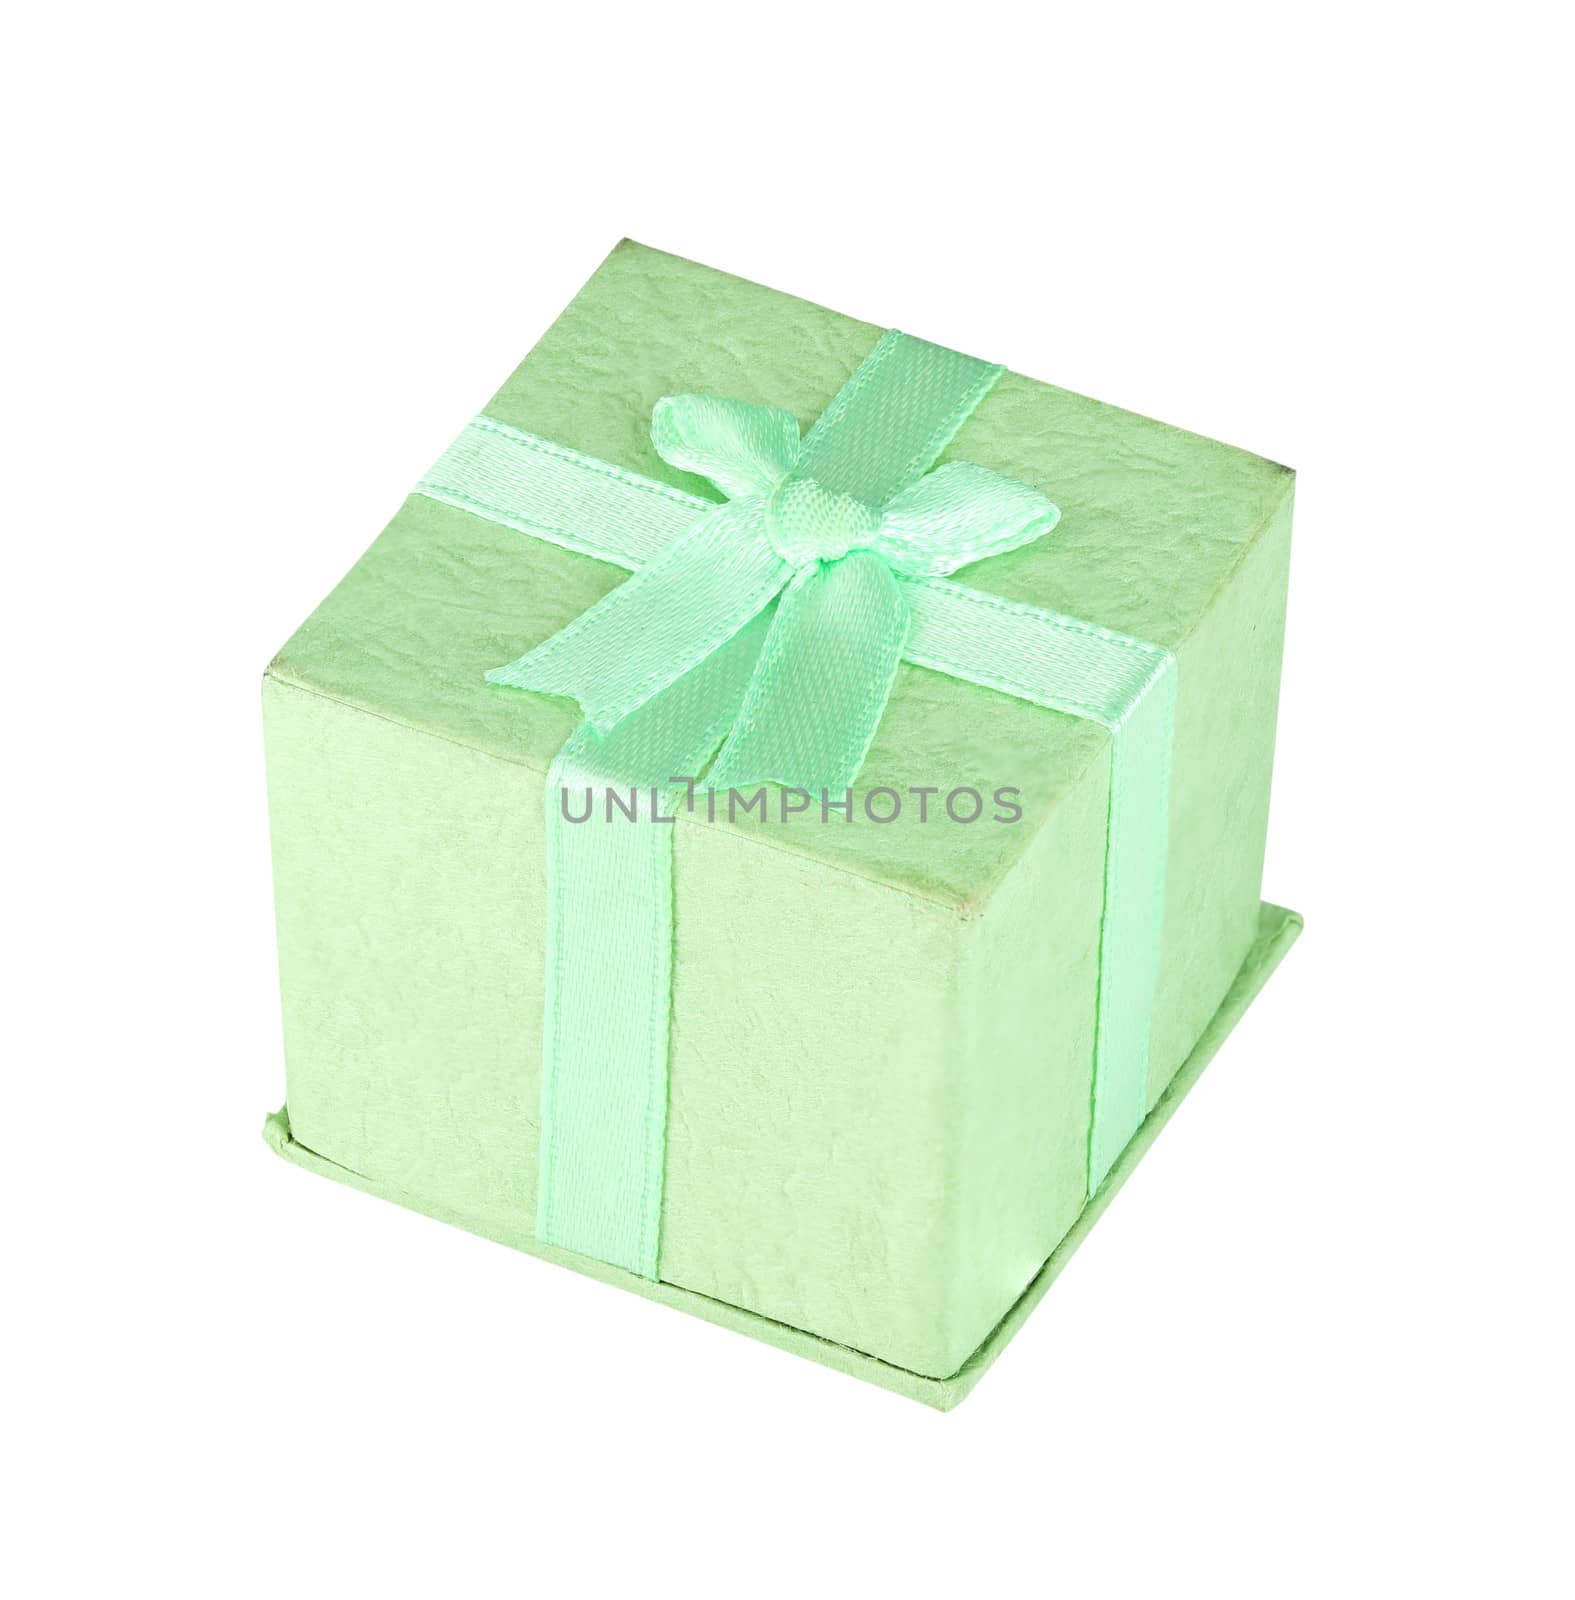 green gift box on white background